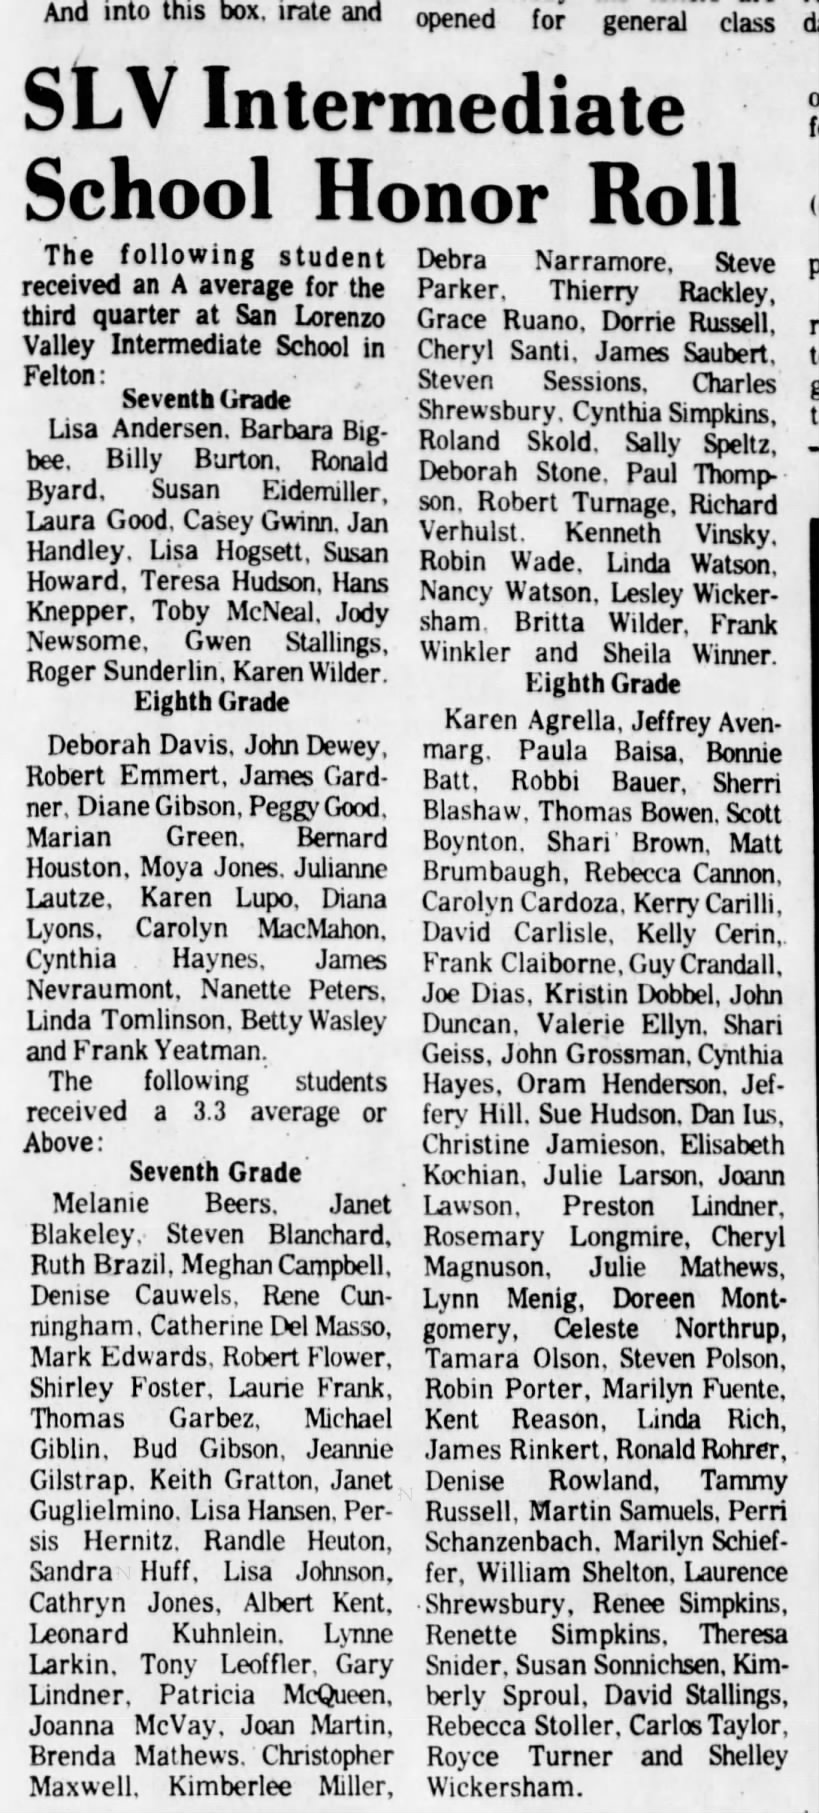 SLV Intermediate School Honor Roll 22 Apr 1973